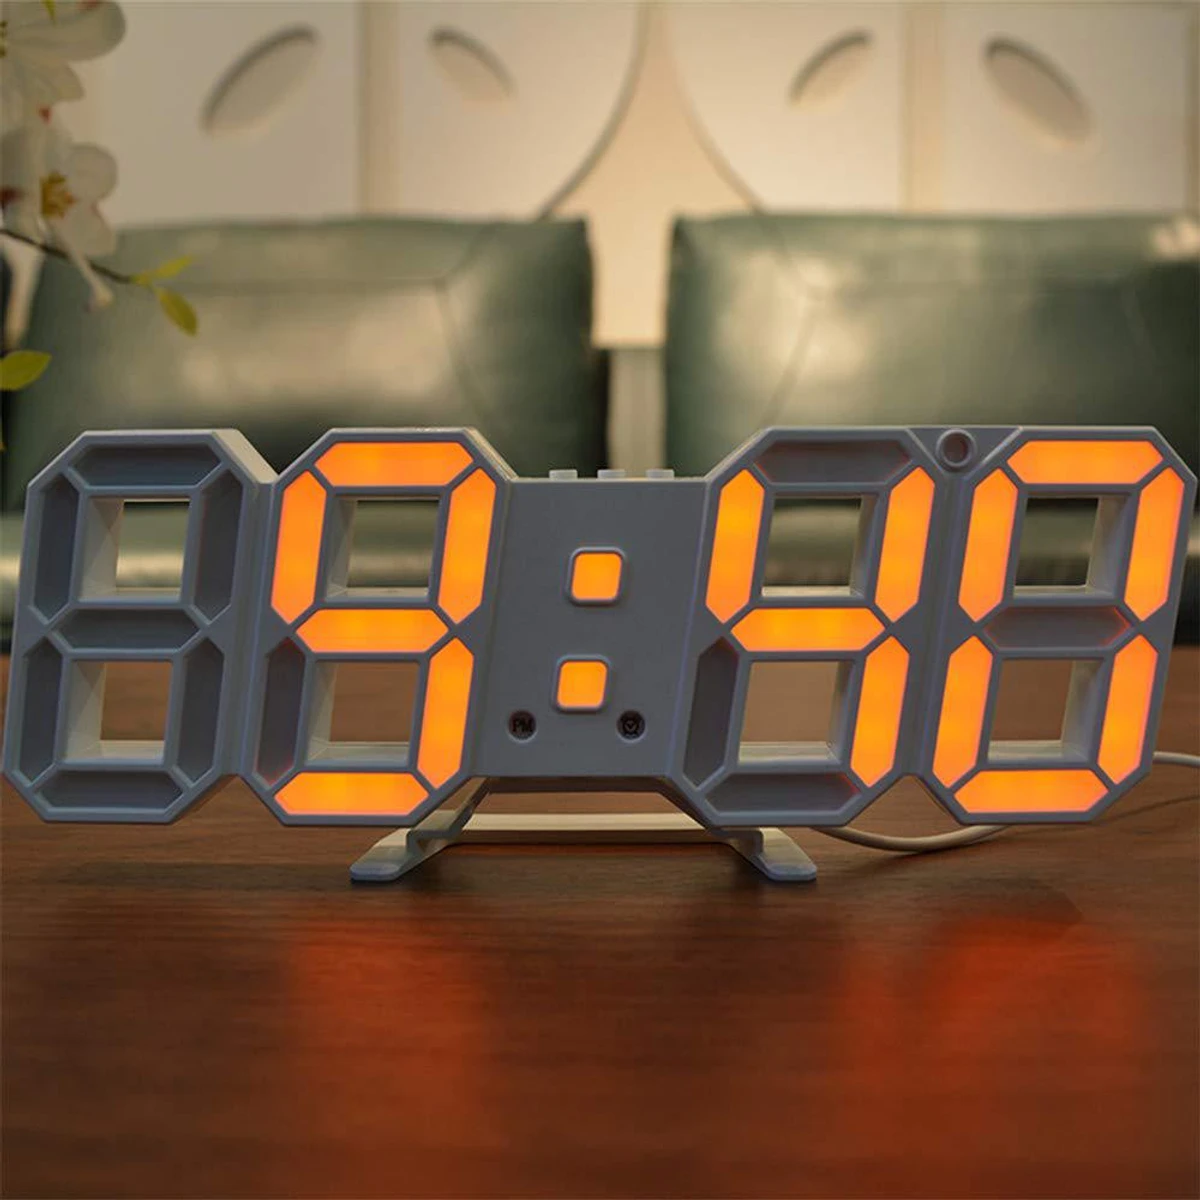 Digital Wall Clock LED Table Clock Time Alarm Temperature Date Sound Control Night Light